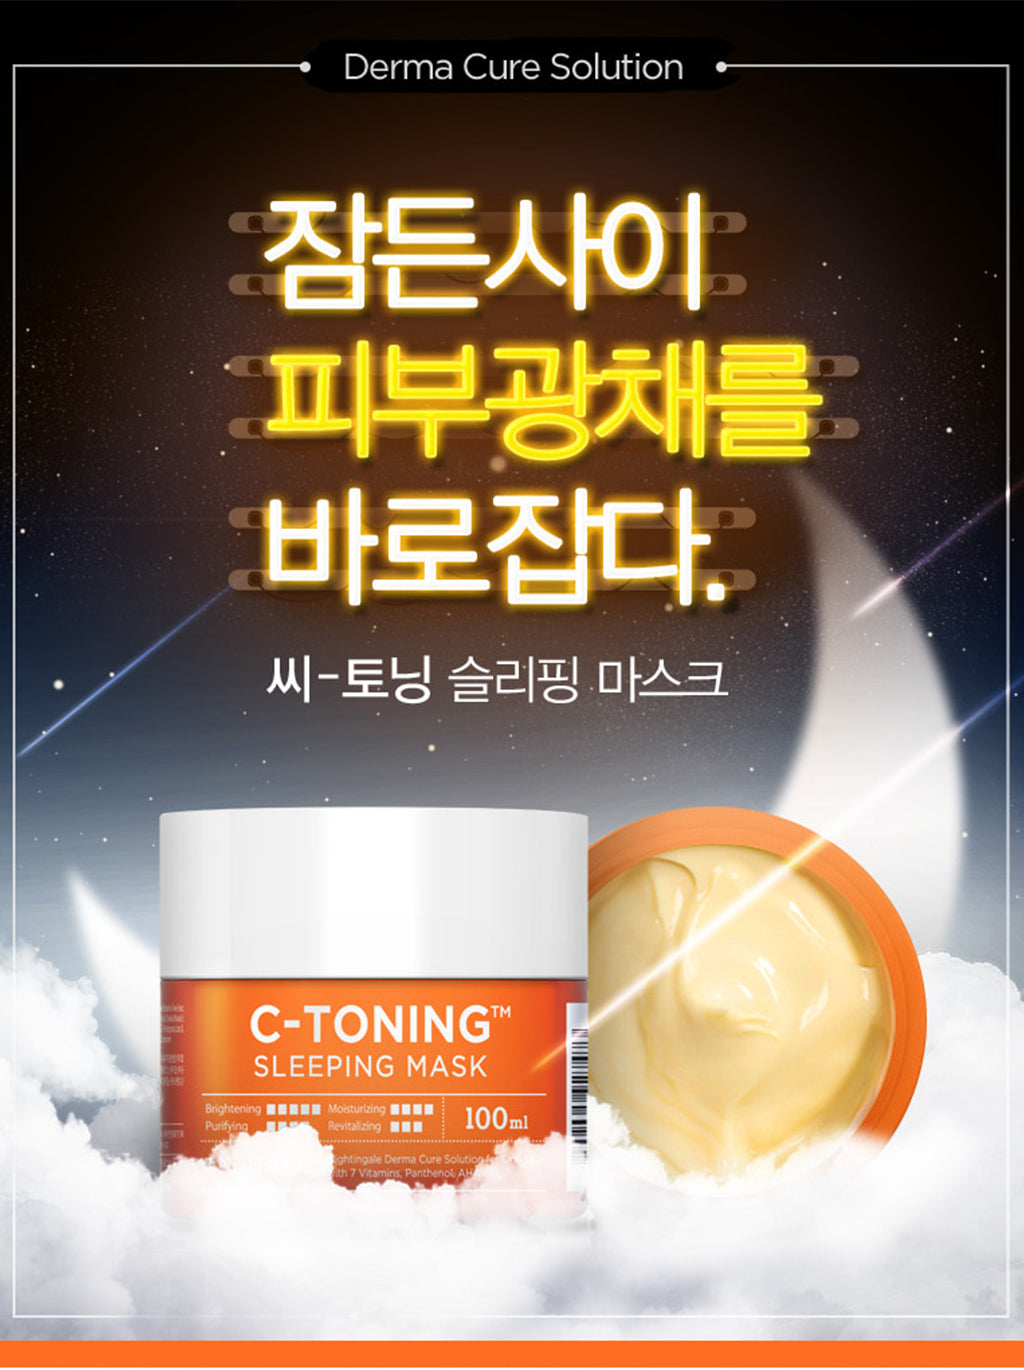 Nightingale C-Toning Sleeping Mask - 100ml, Hydrating & Brightening for Clear, Glowing Skin, Korean Skincare, Vitamin Radiance Enhancement, Moisturizing Barrier